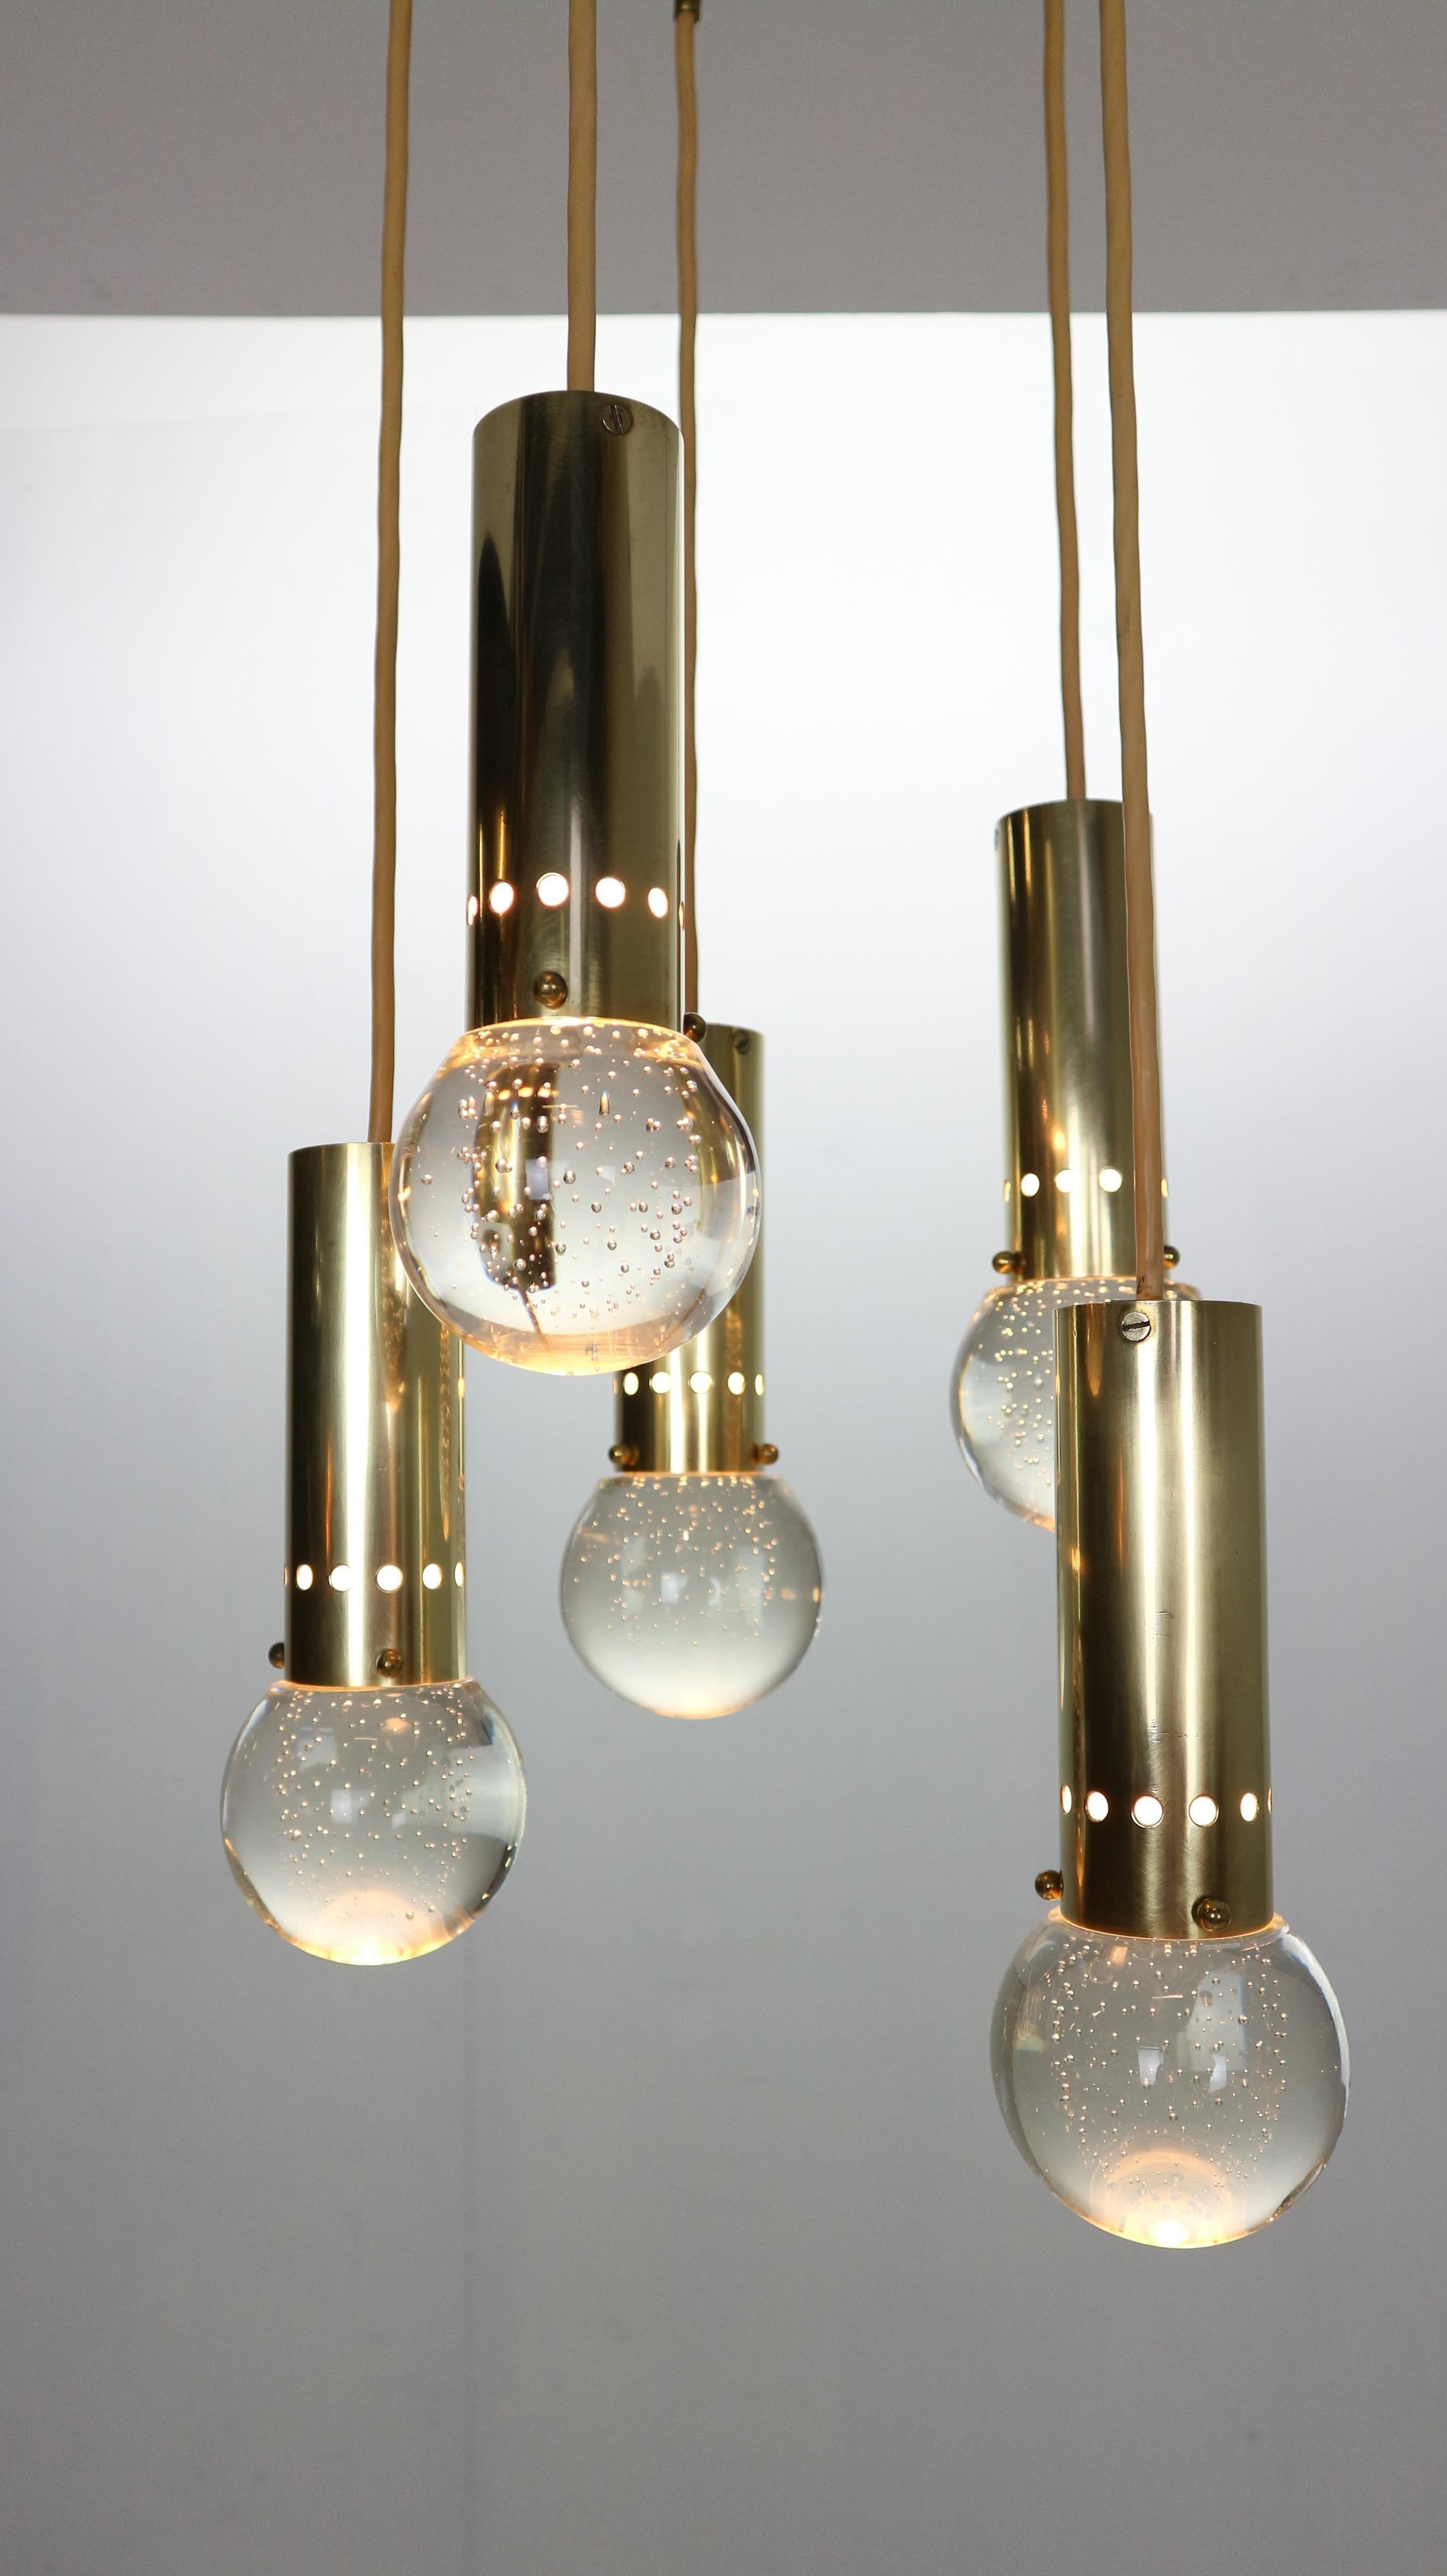 Gino Sarfatti SP/ 16 For Arteluce Unique Brass Bubble Pendant Lamp, 1950, Italy In Good Condition For Sale In The Hague, NL